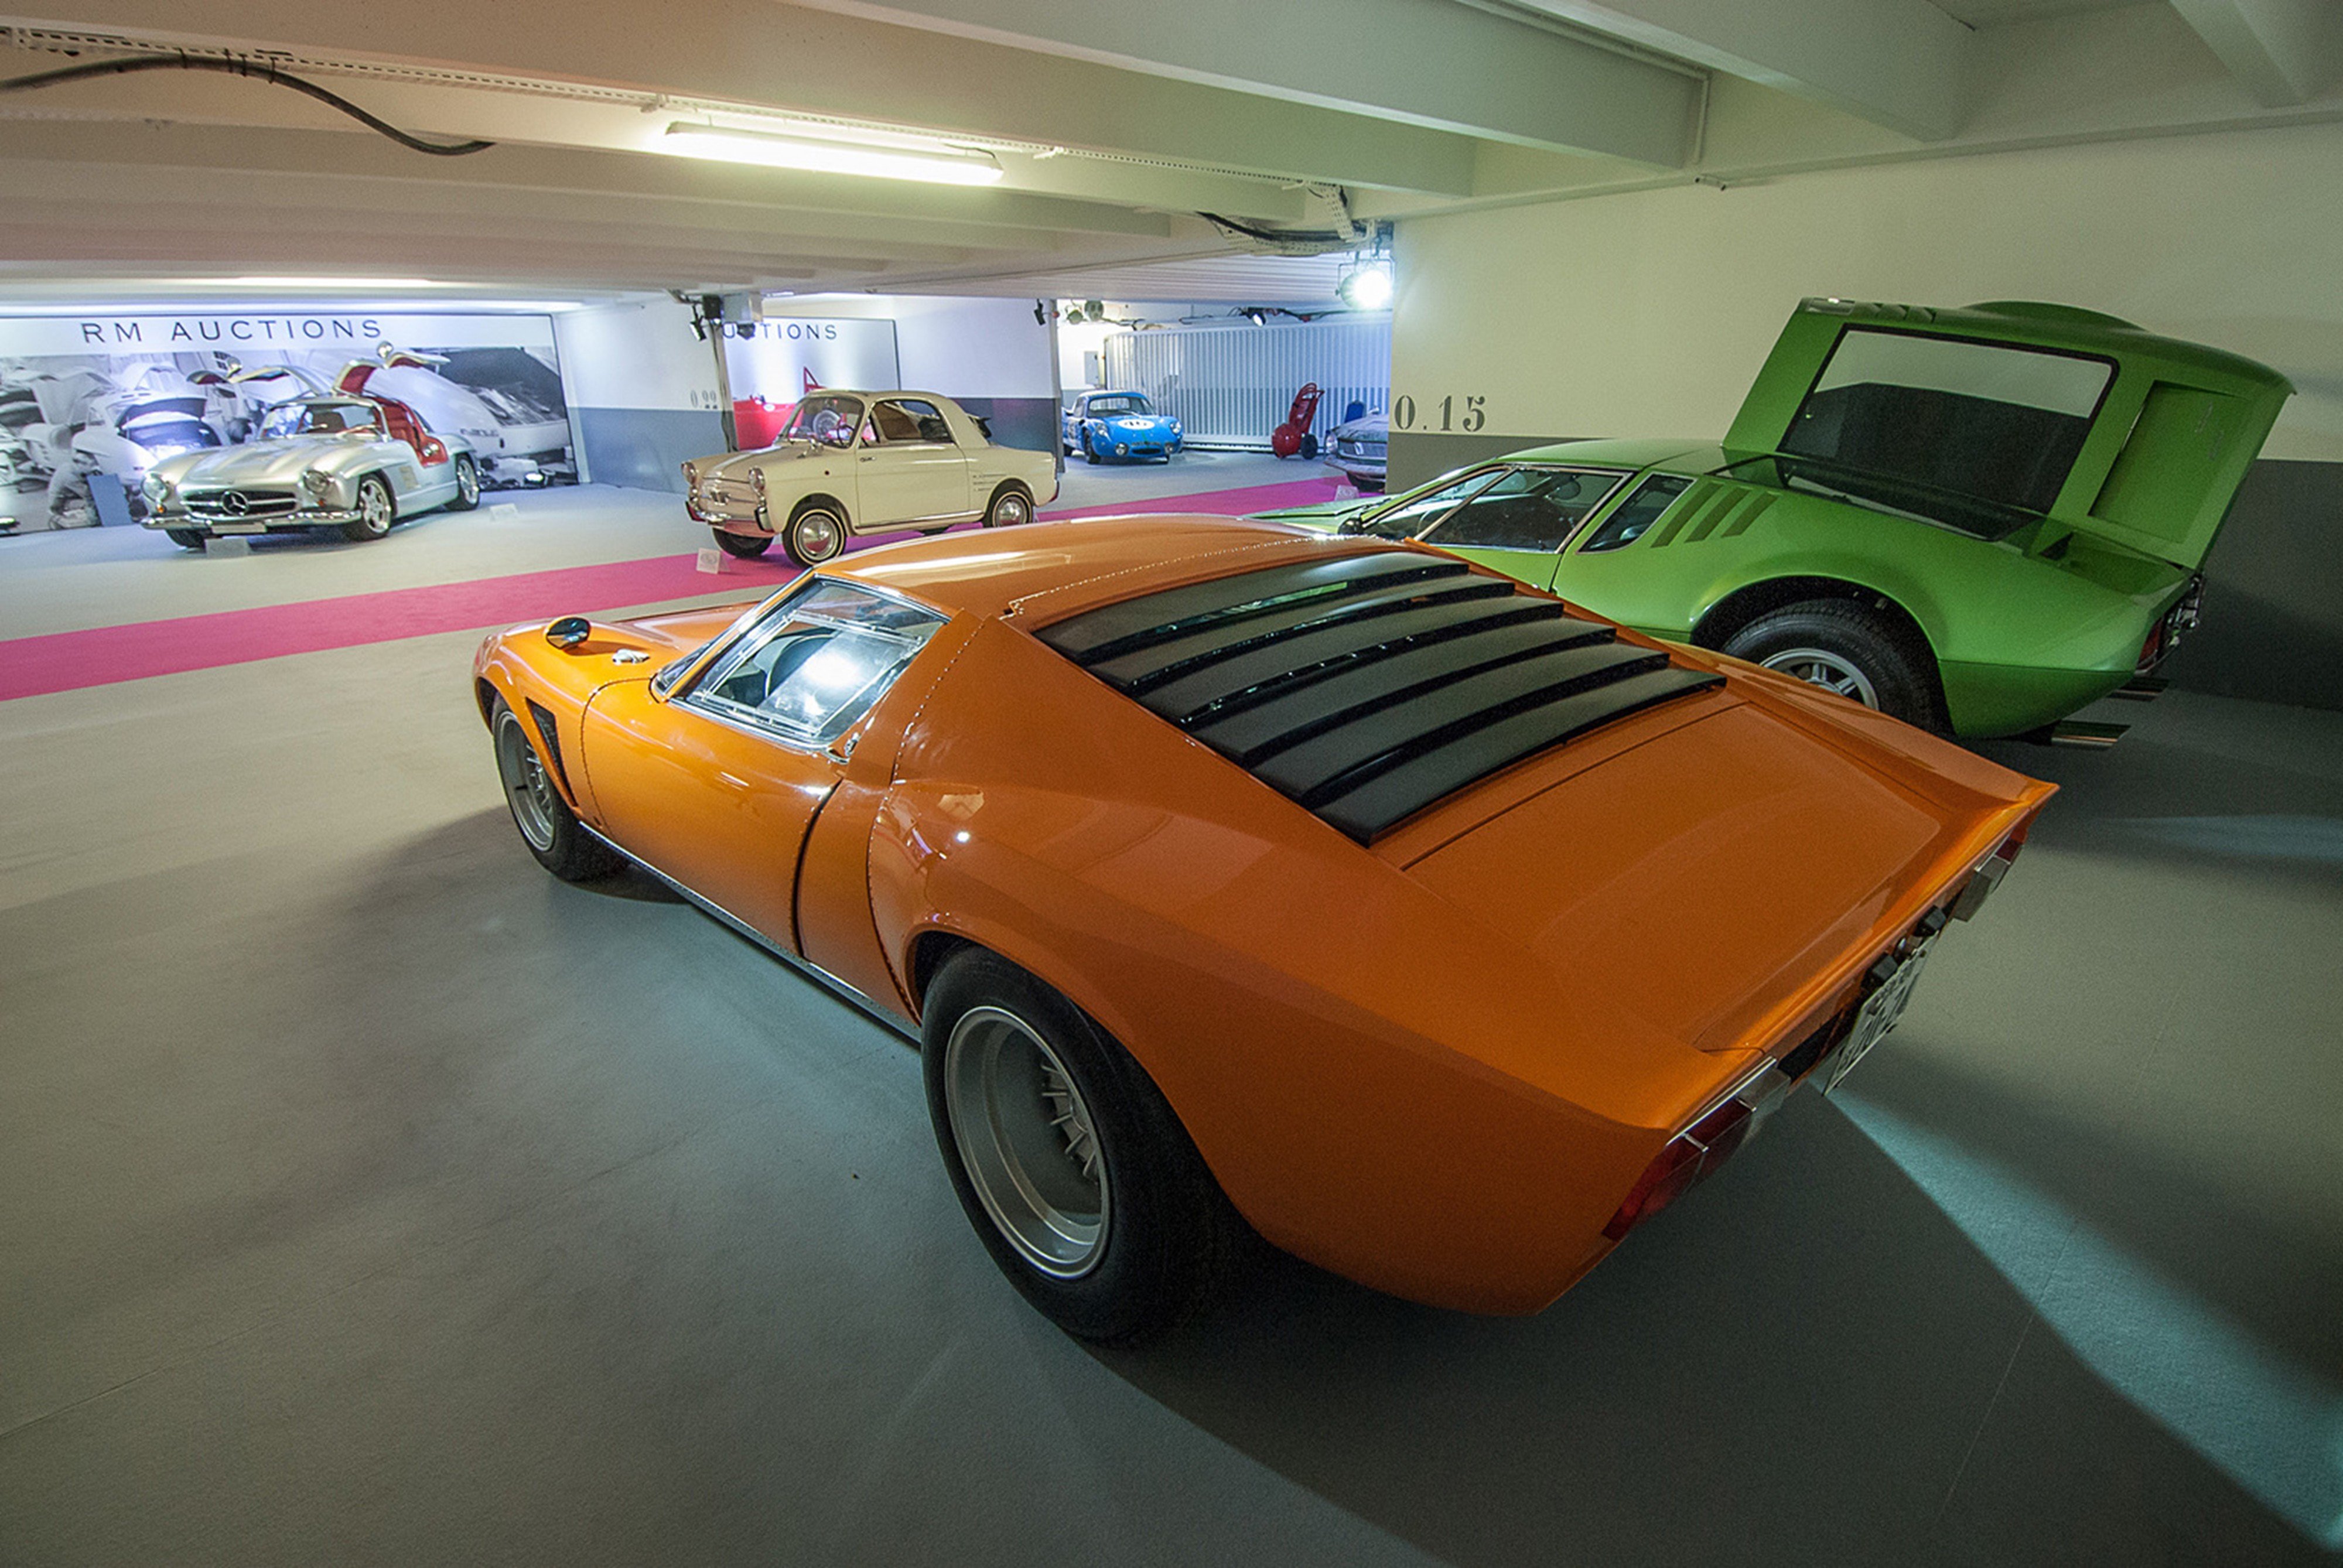 rmand039s, Auction, In, Monaco, Classic, Car, 1969, Lamborghini, Miura, S jota, 2, 4000x2677 Wallpaper